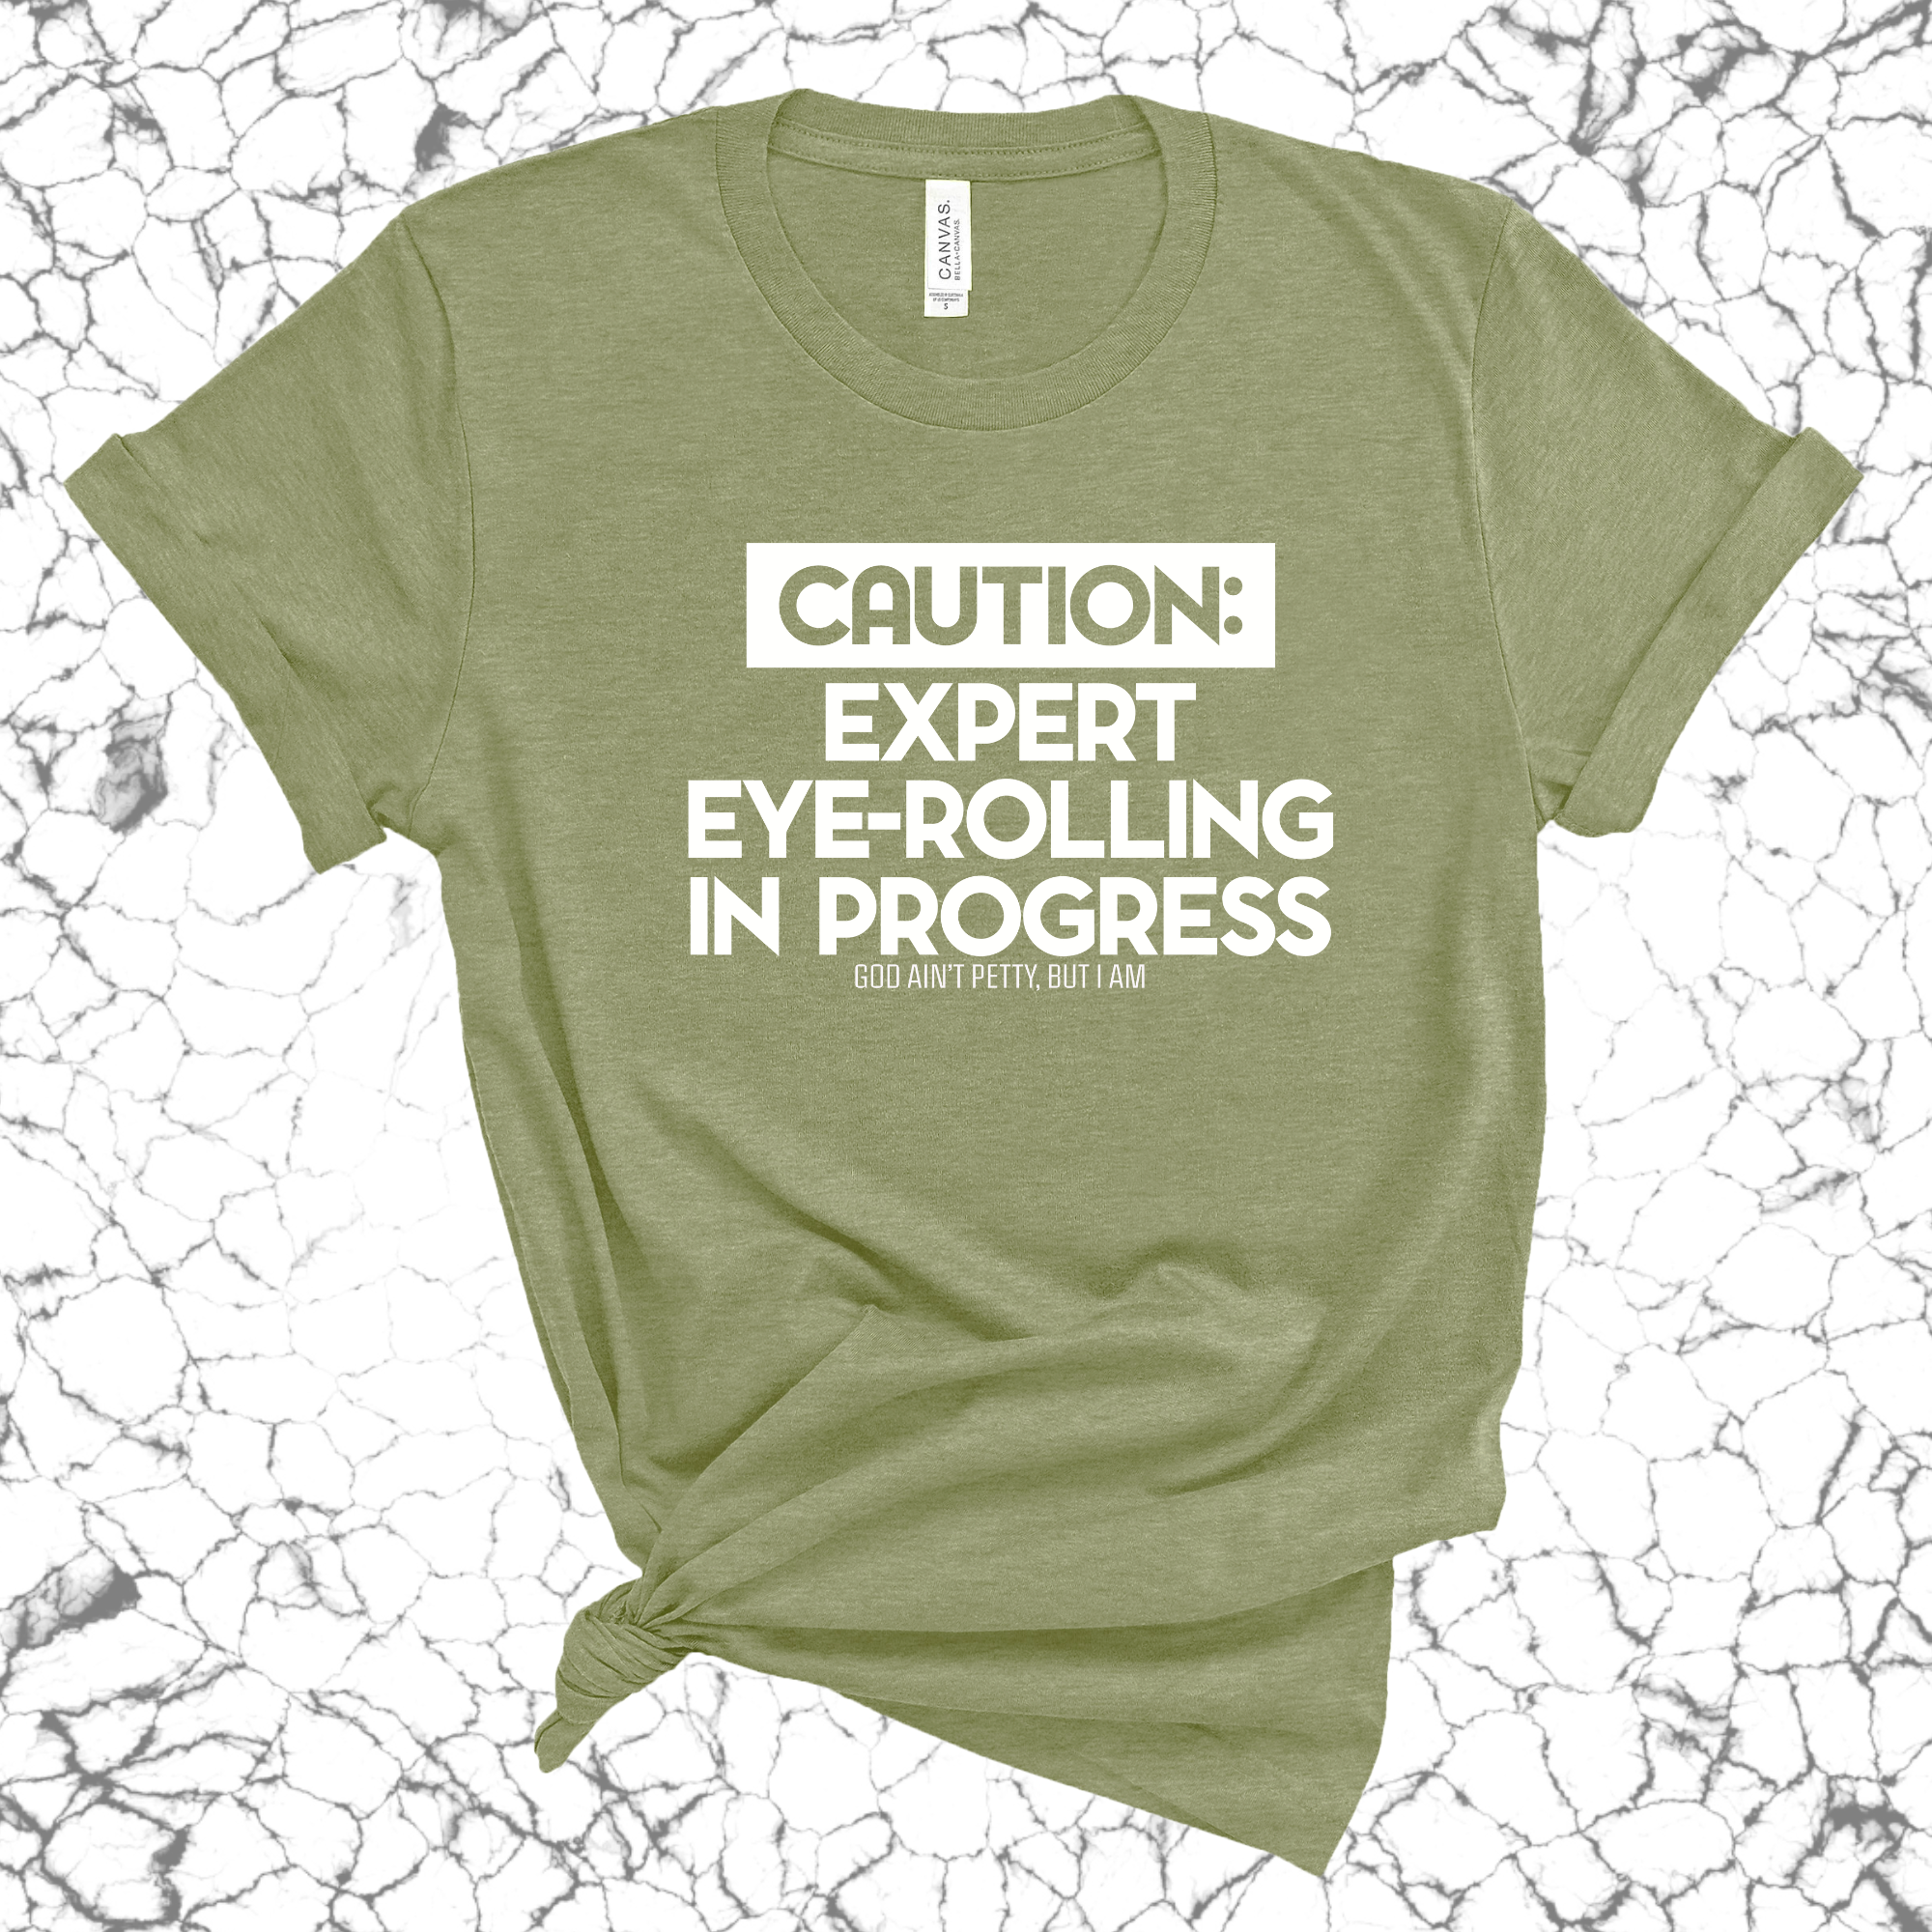 Caution Expert eye-rolling in progress Unisex Tee-T-Shirt-The Original God Ain't Petty But I Am